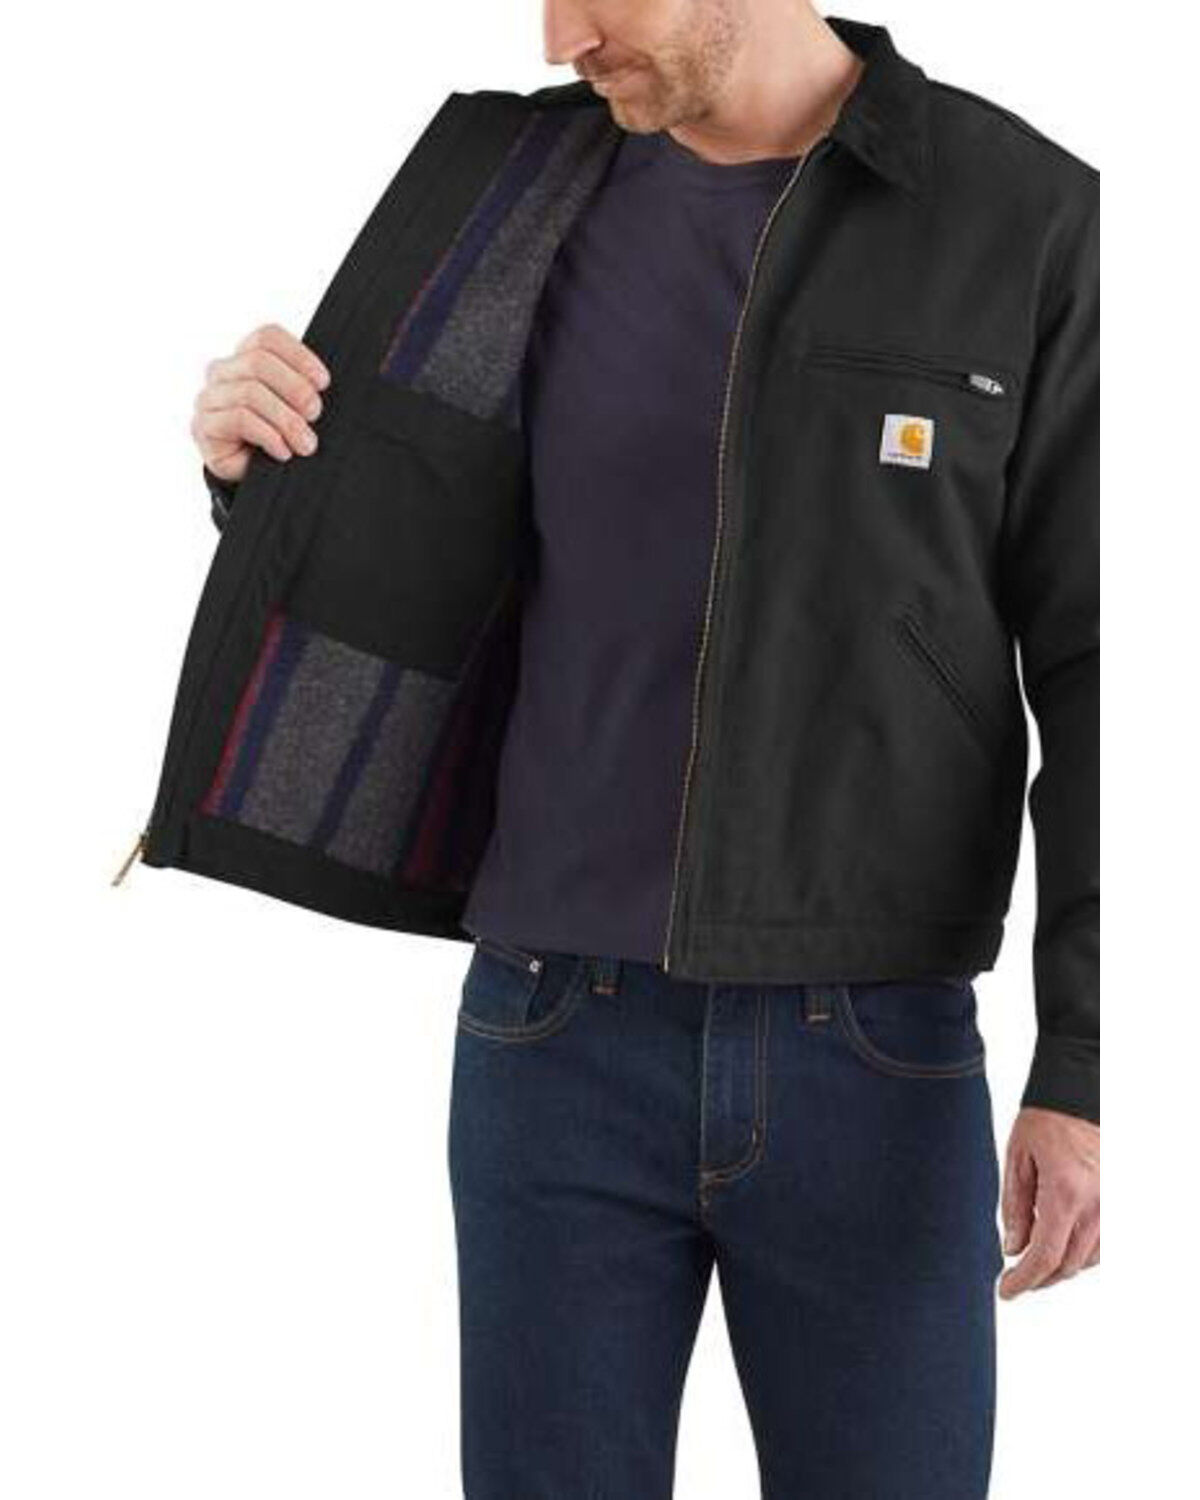 carhartt rn14806 jacket price